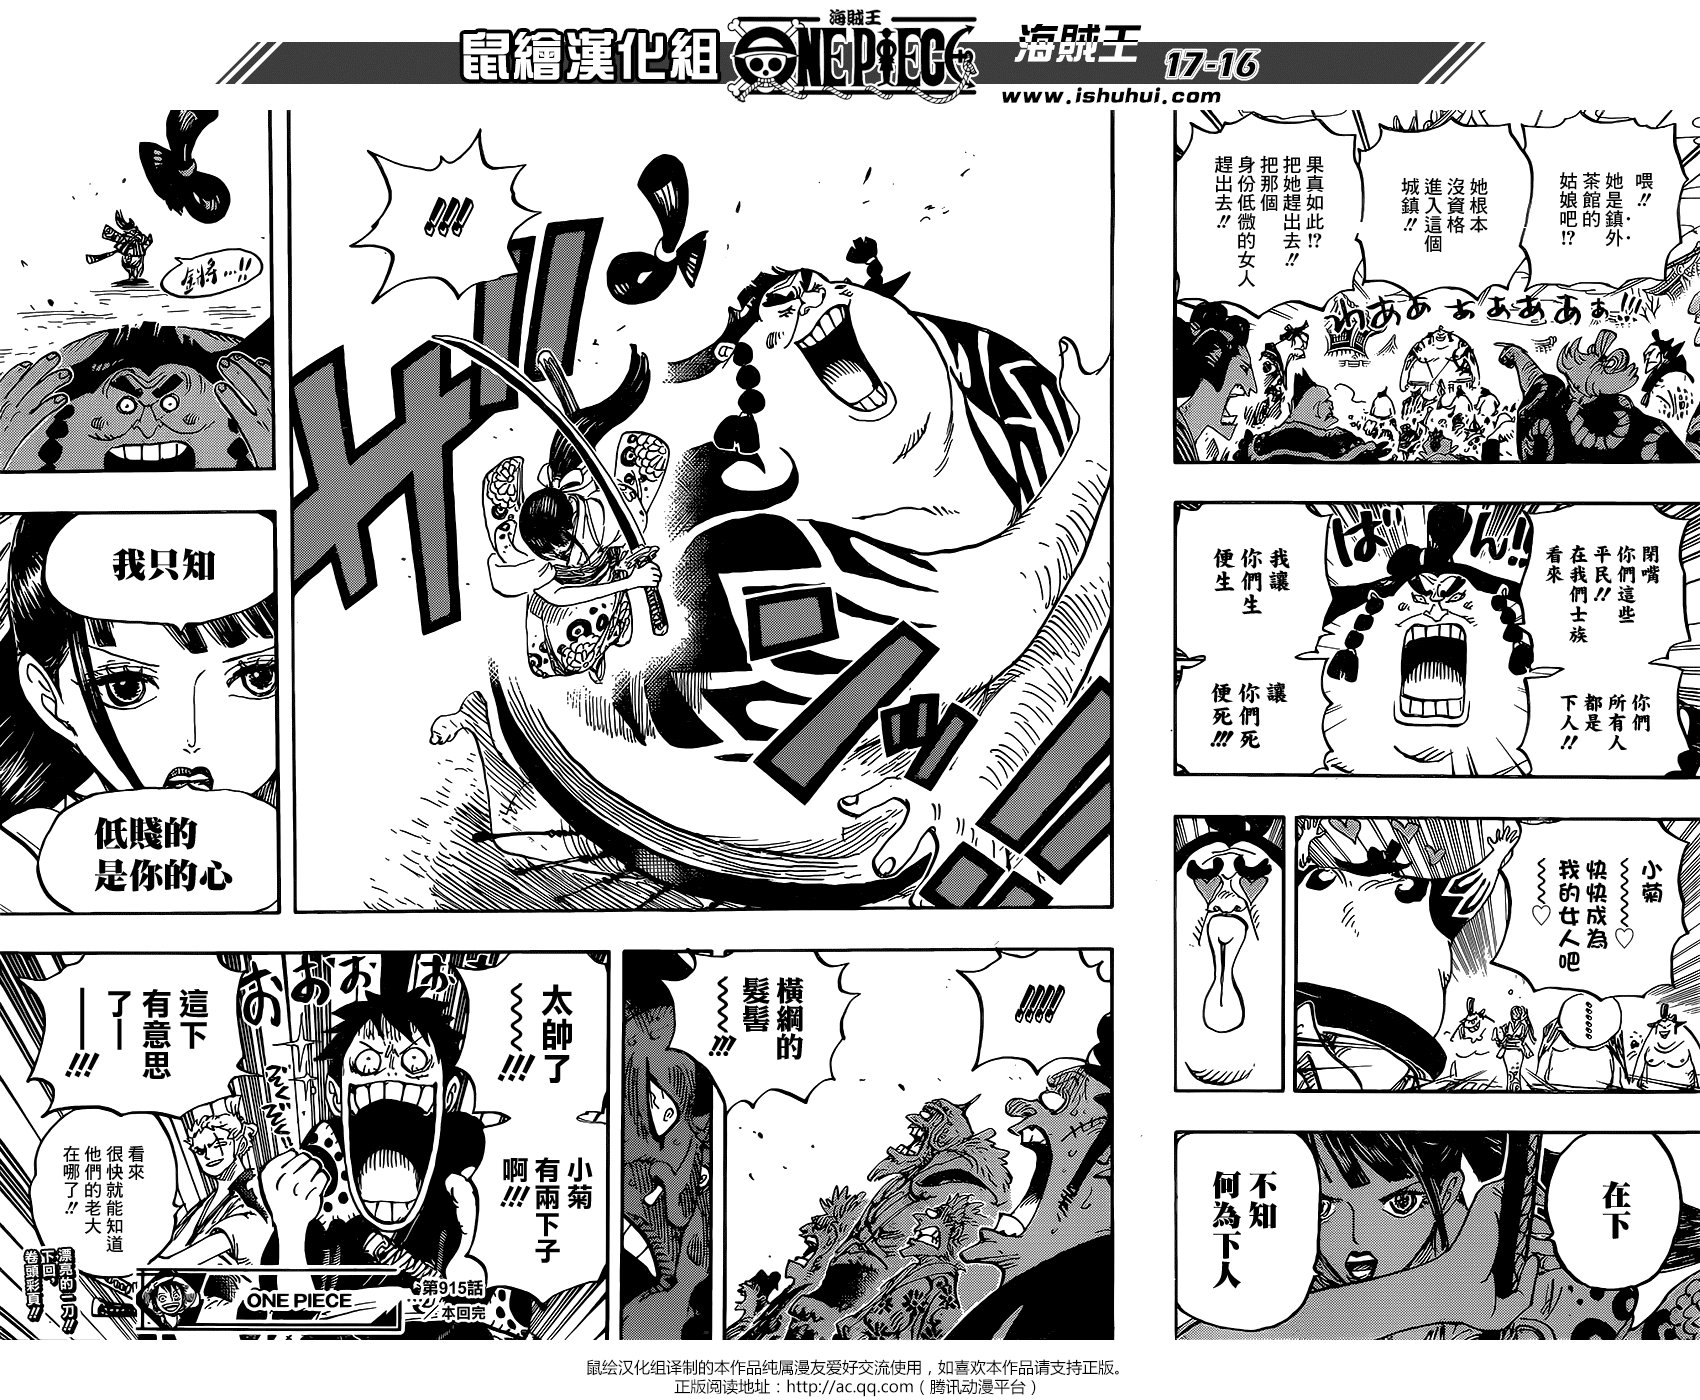 Todo Manga Anime One Piece 915 Raw Onepiece Onepiece915 T Co Nxtqq0idn4 T Co Czpna10dgq Twitter